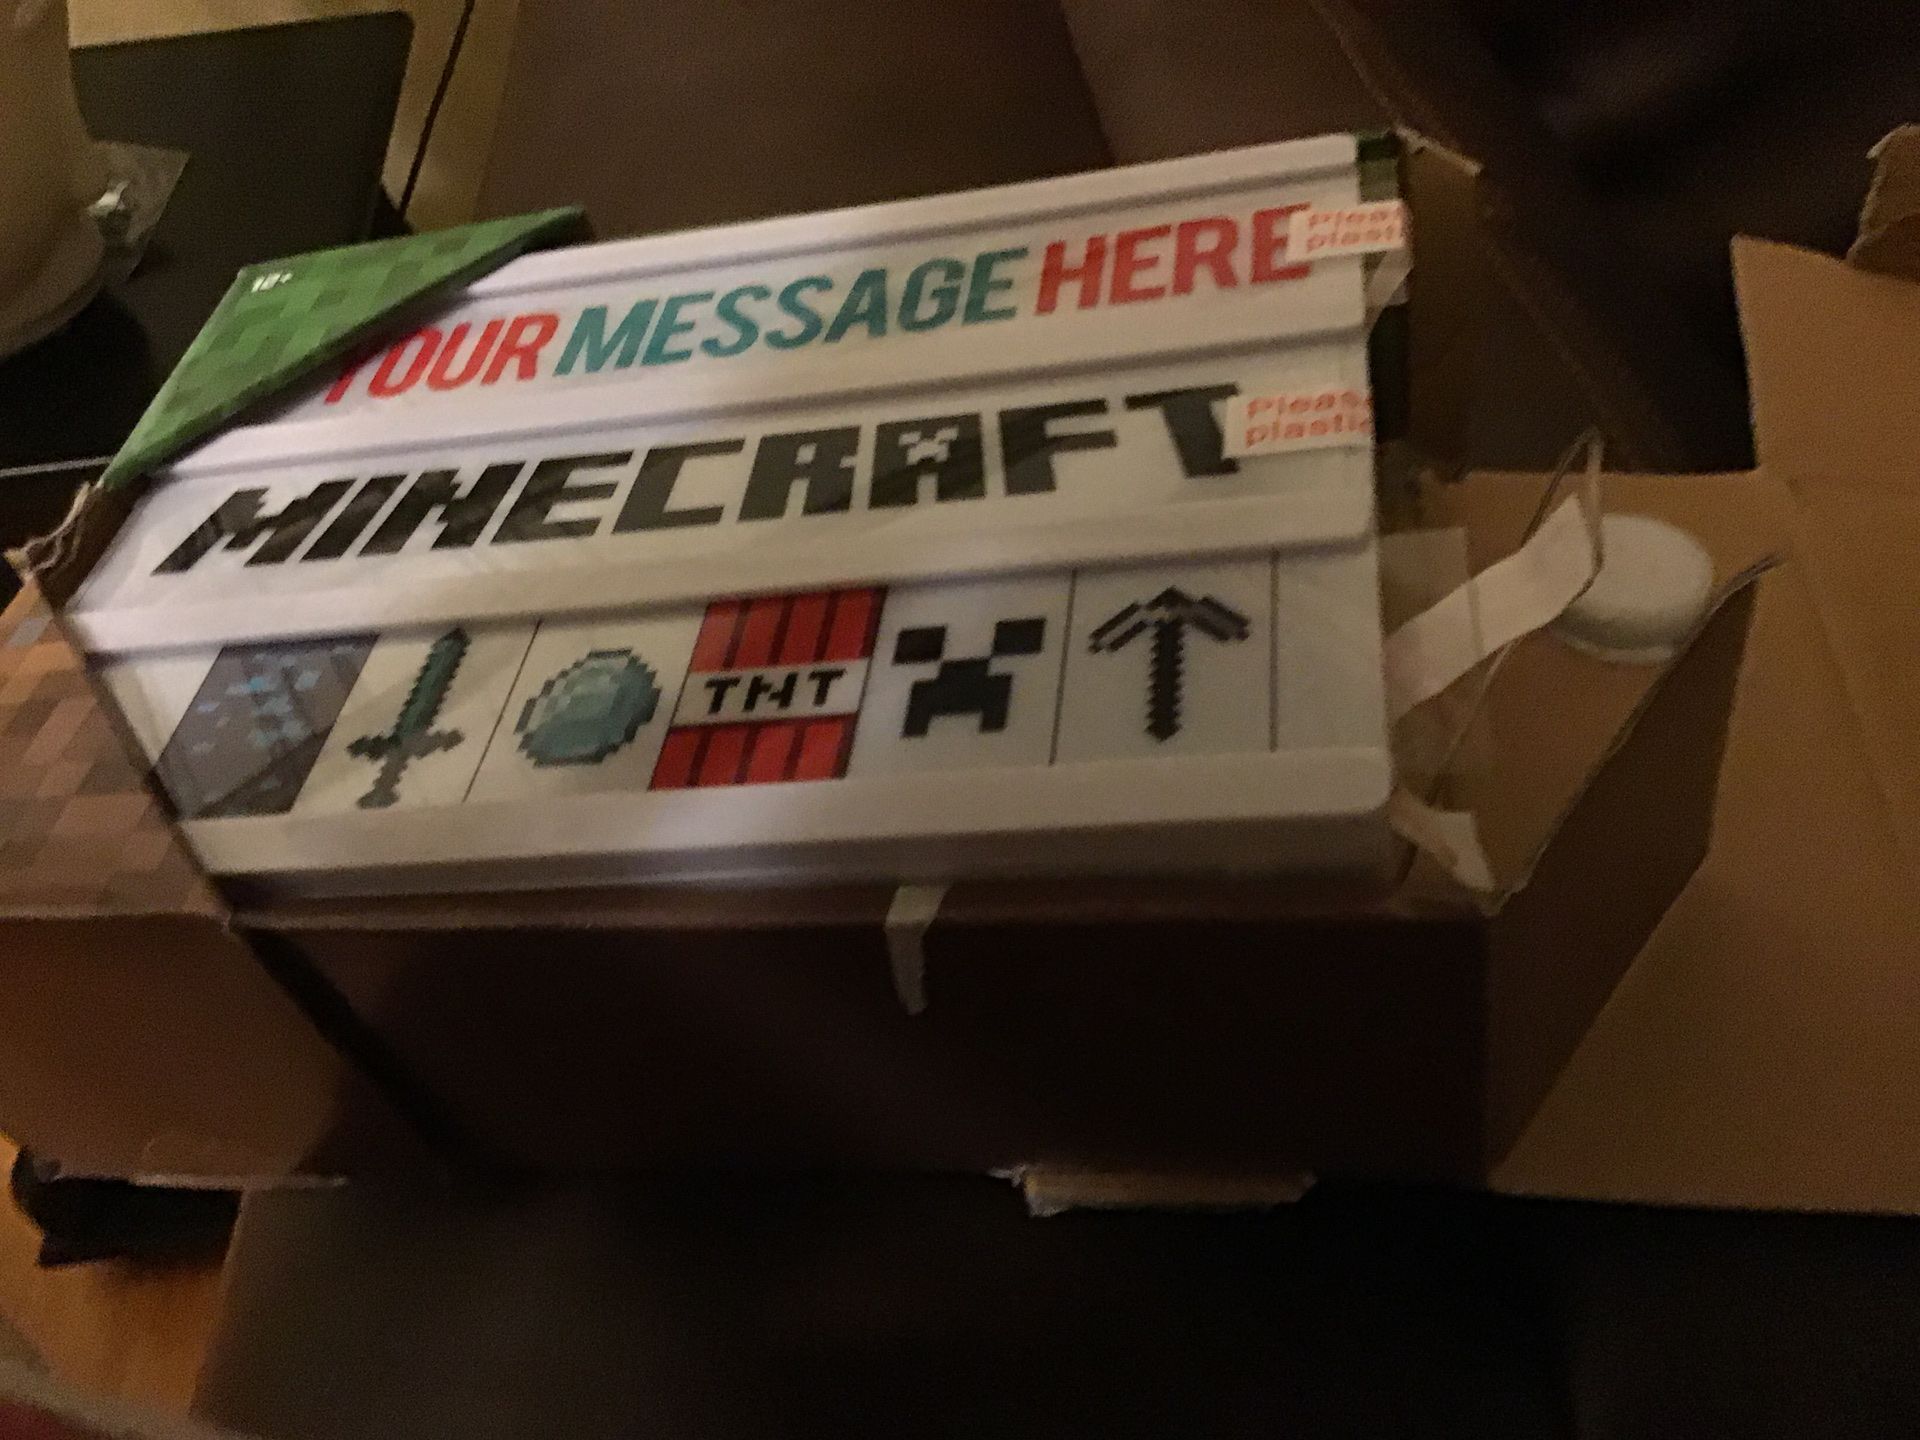 Minecraft Messages display light up